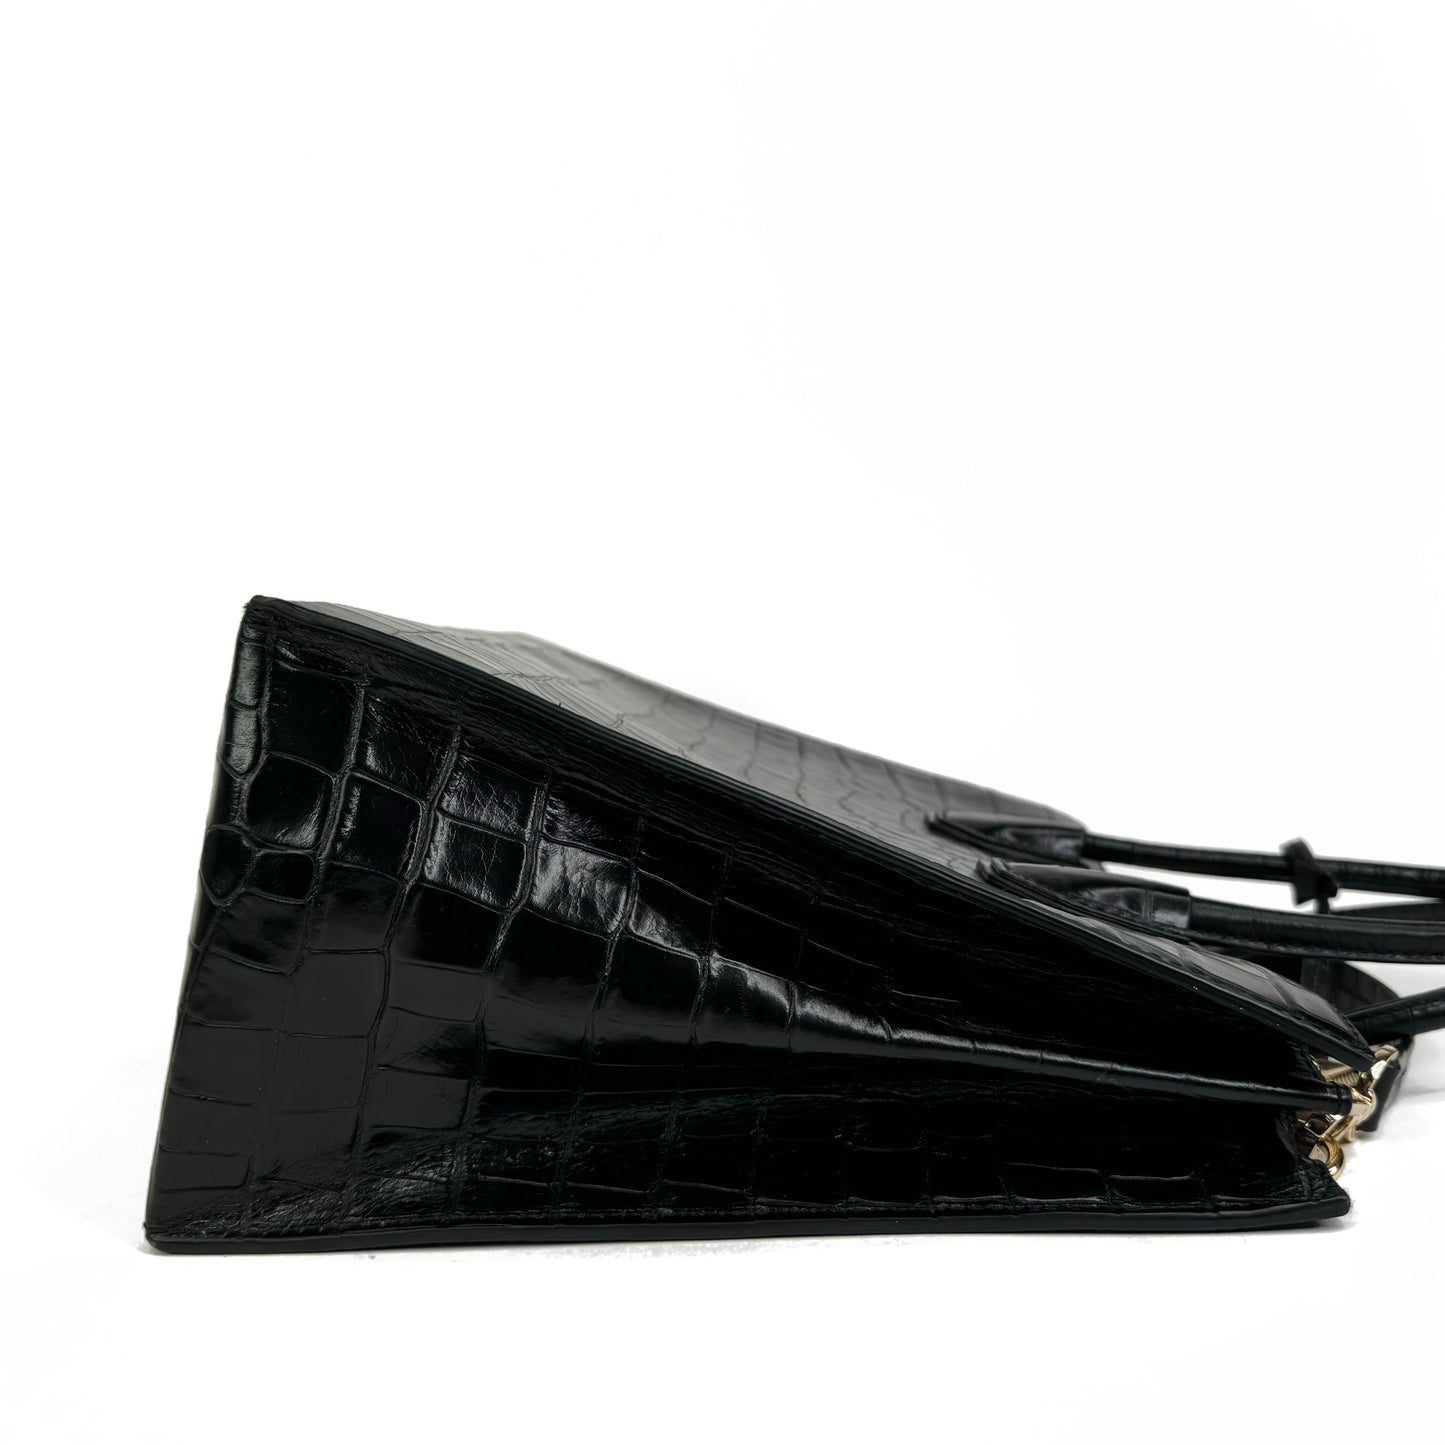 Michael Kors Mercer Crocodile-Embossed Leather Tote Bag